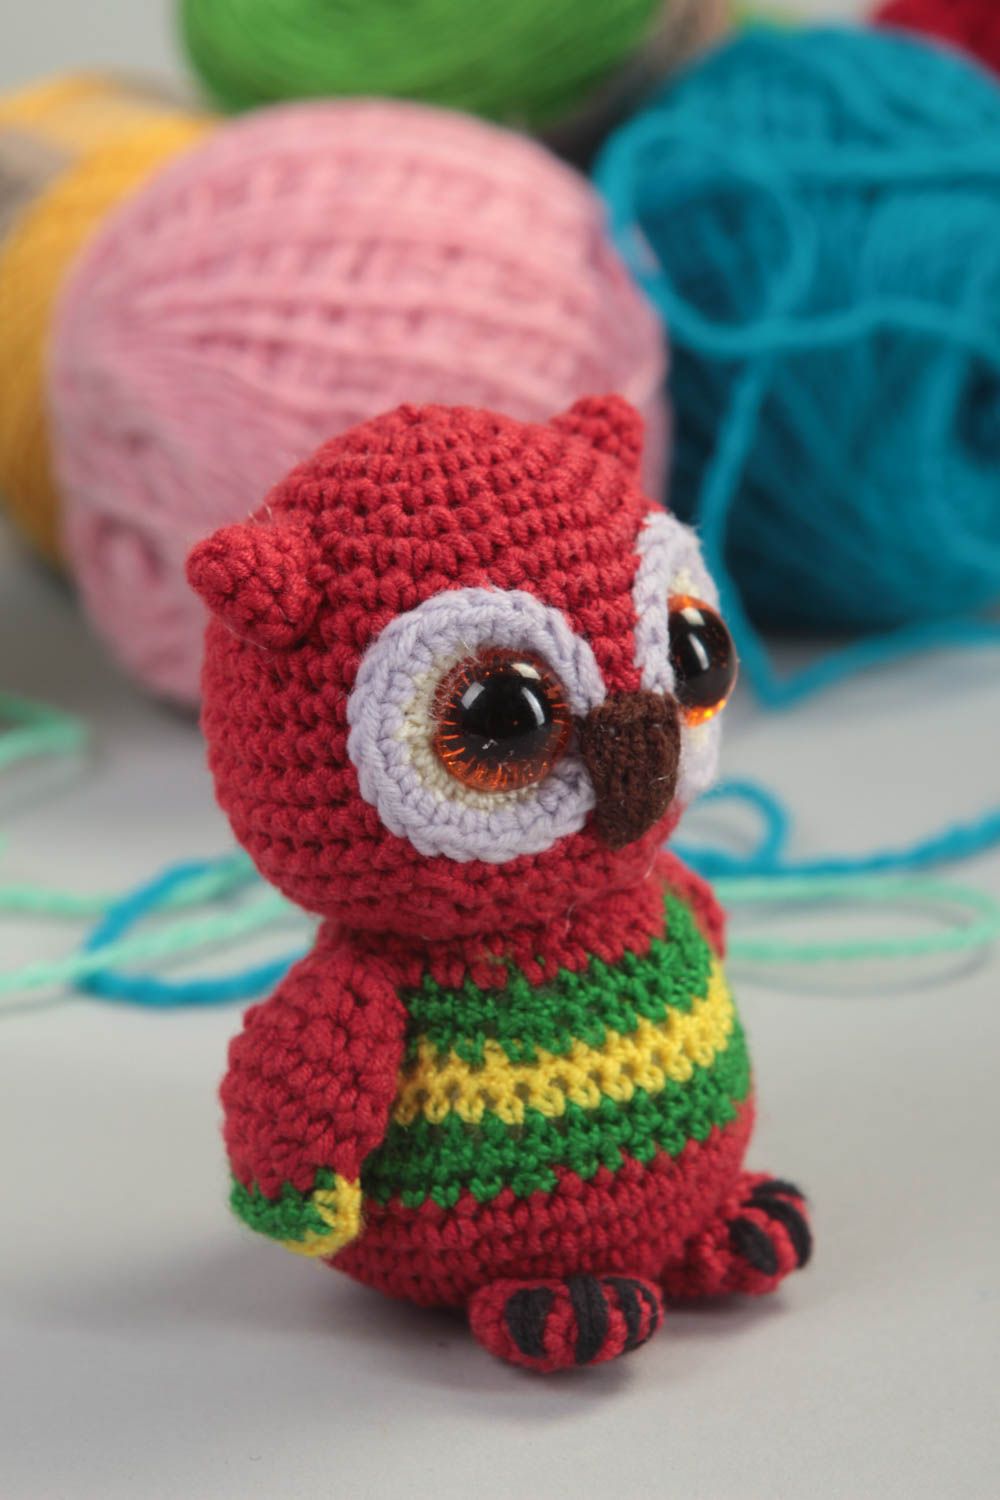 Beautiful handmade crochet toy stuffed soft toy nursery design gifts for kids photo 1